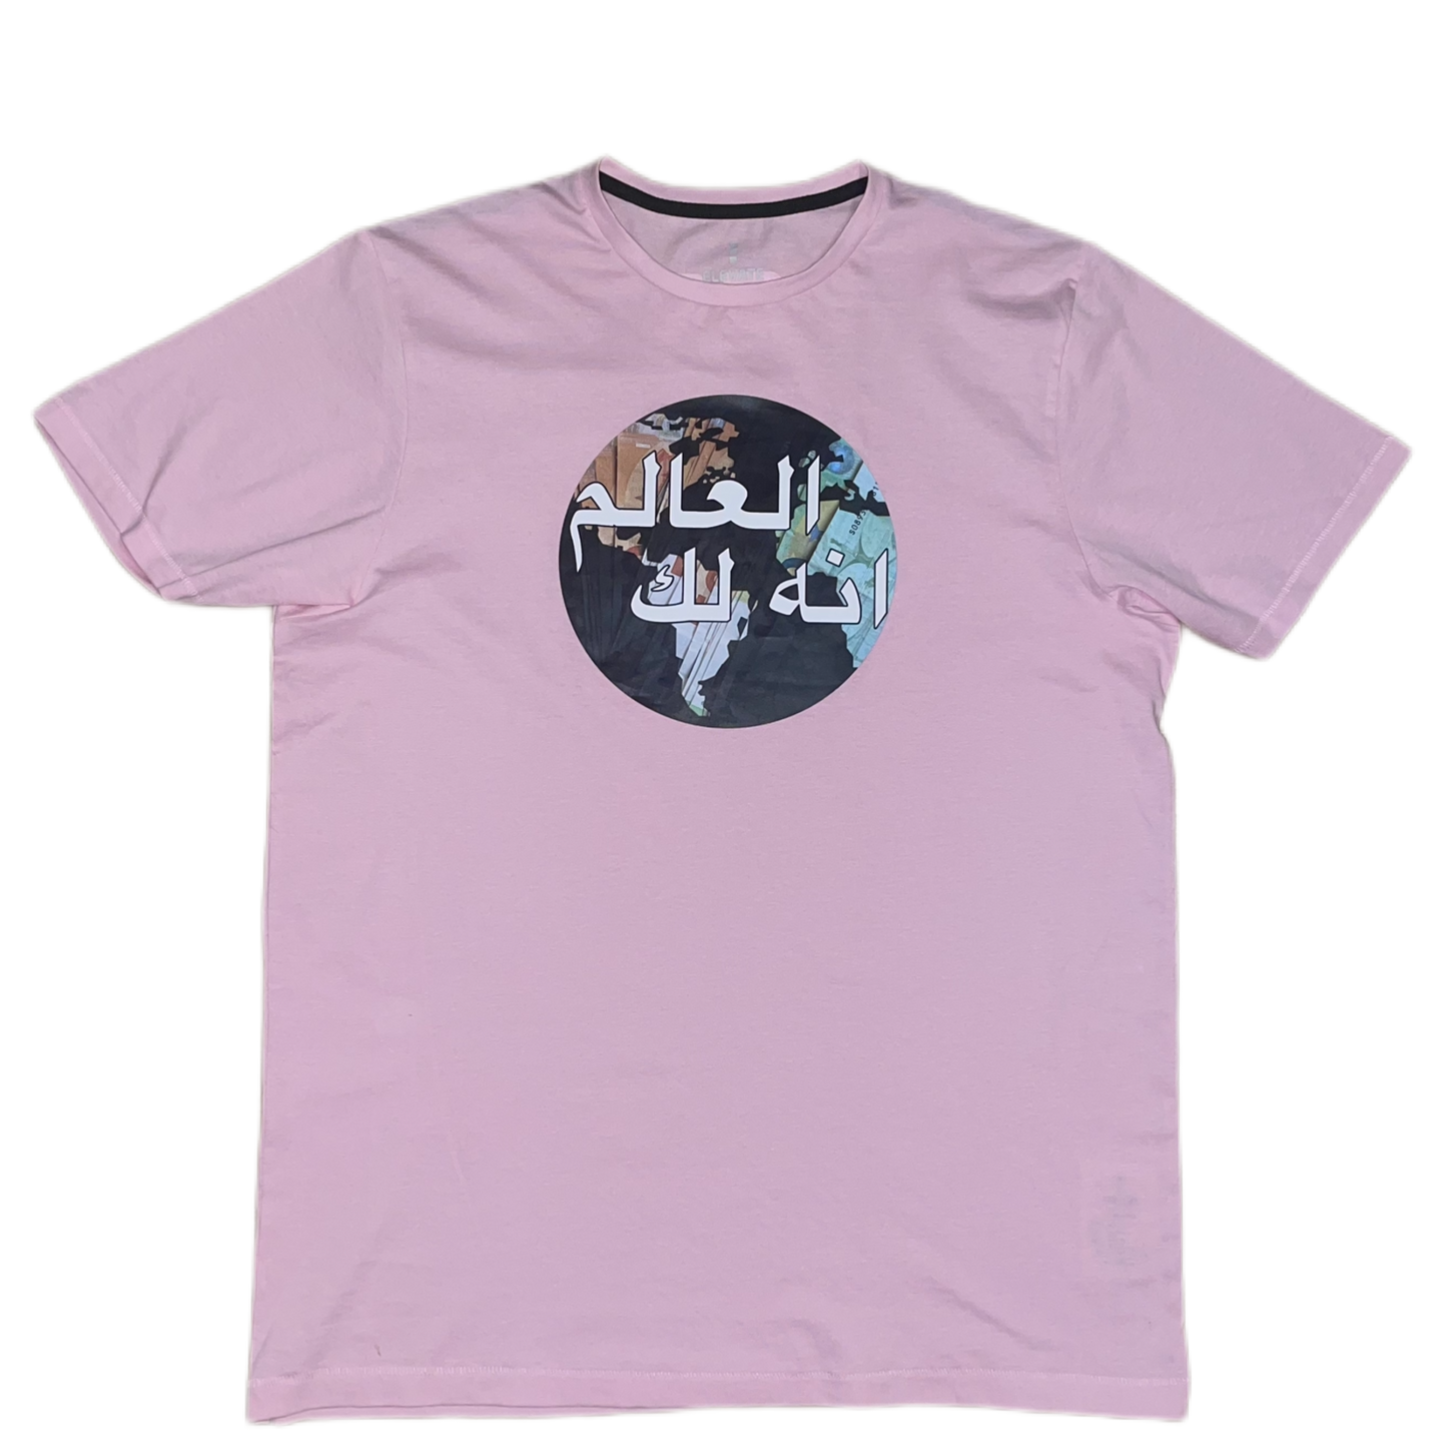 T-Shirt Pink